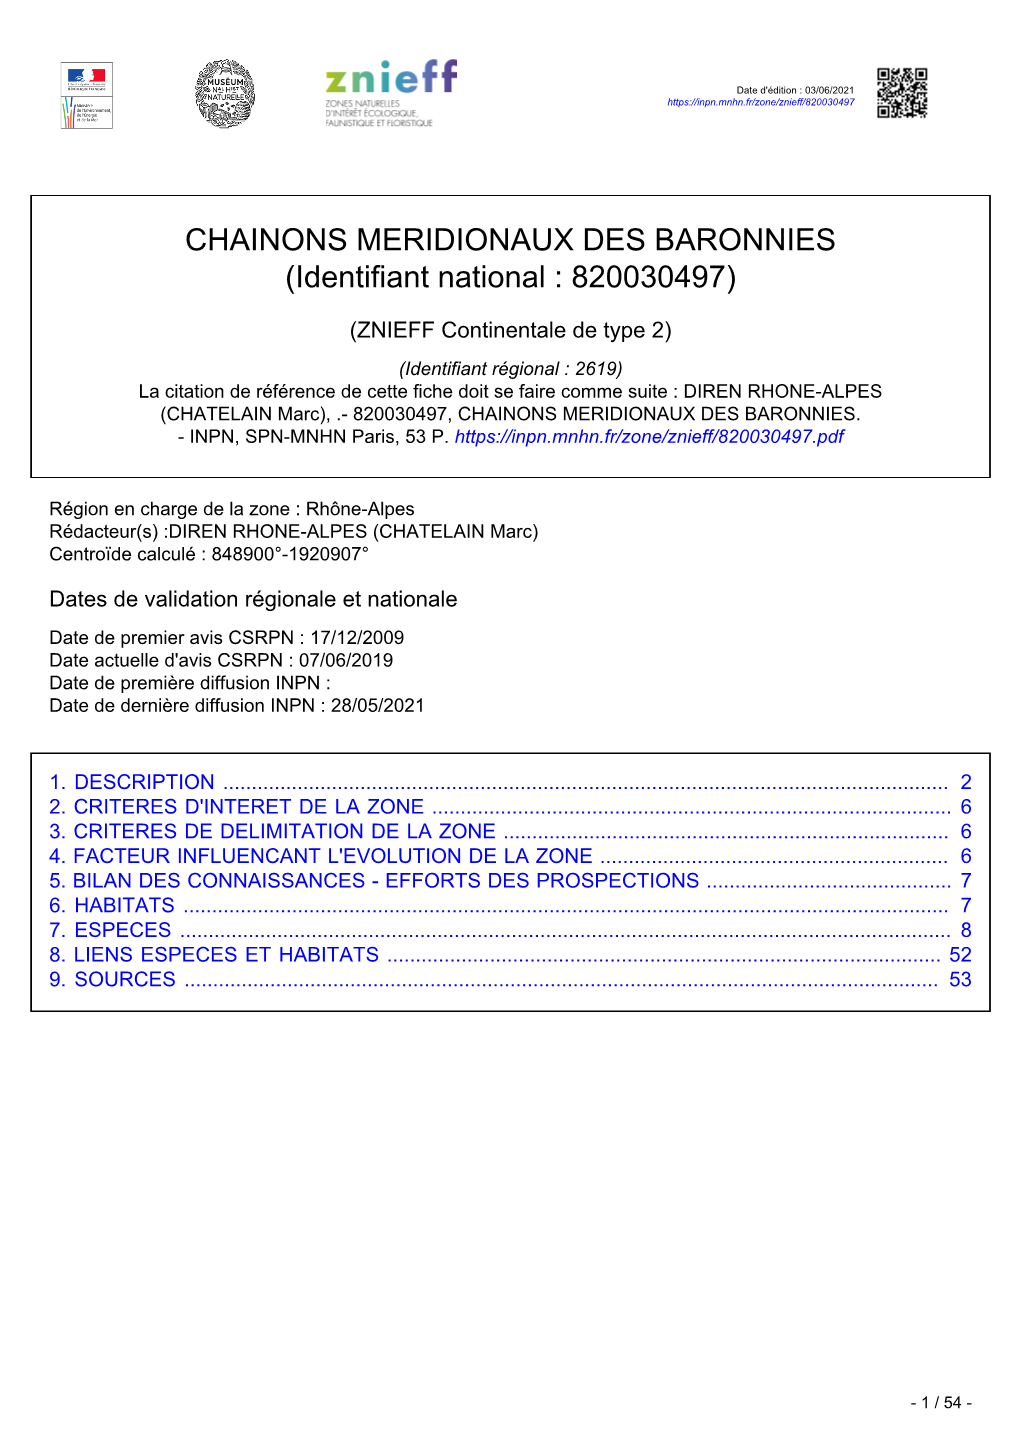 CHAINONS MERIDIONAUX DES BARONNIES (Identifiant National : 820030497)